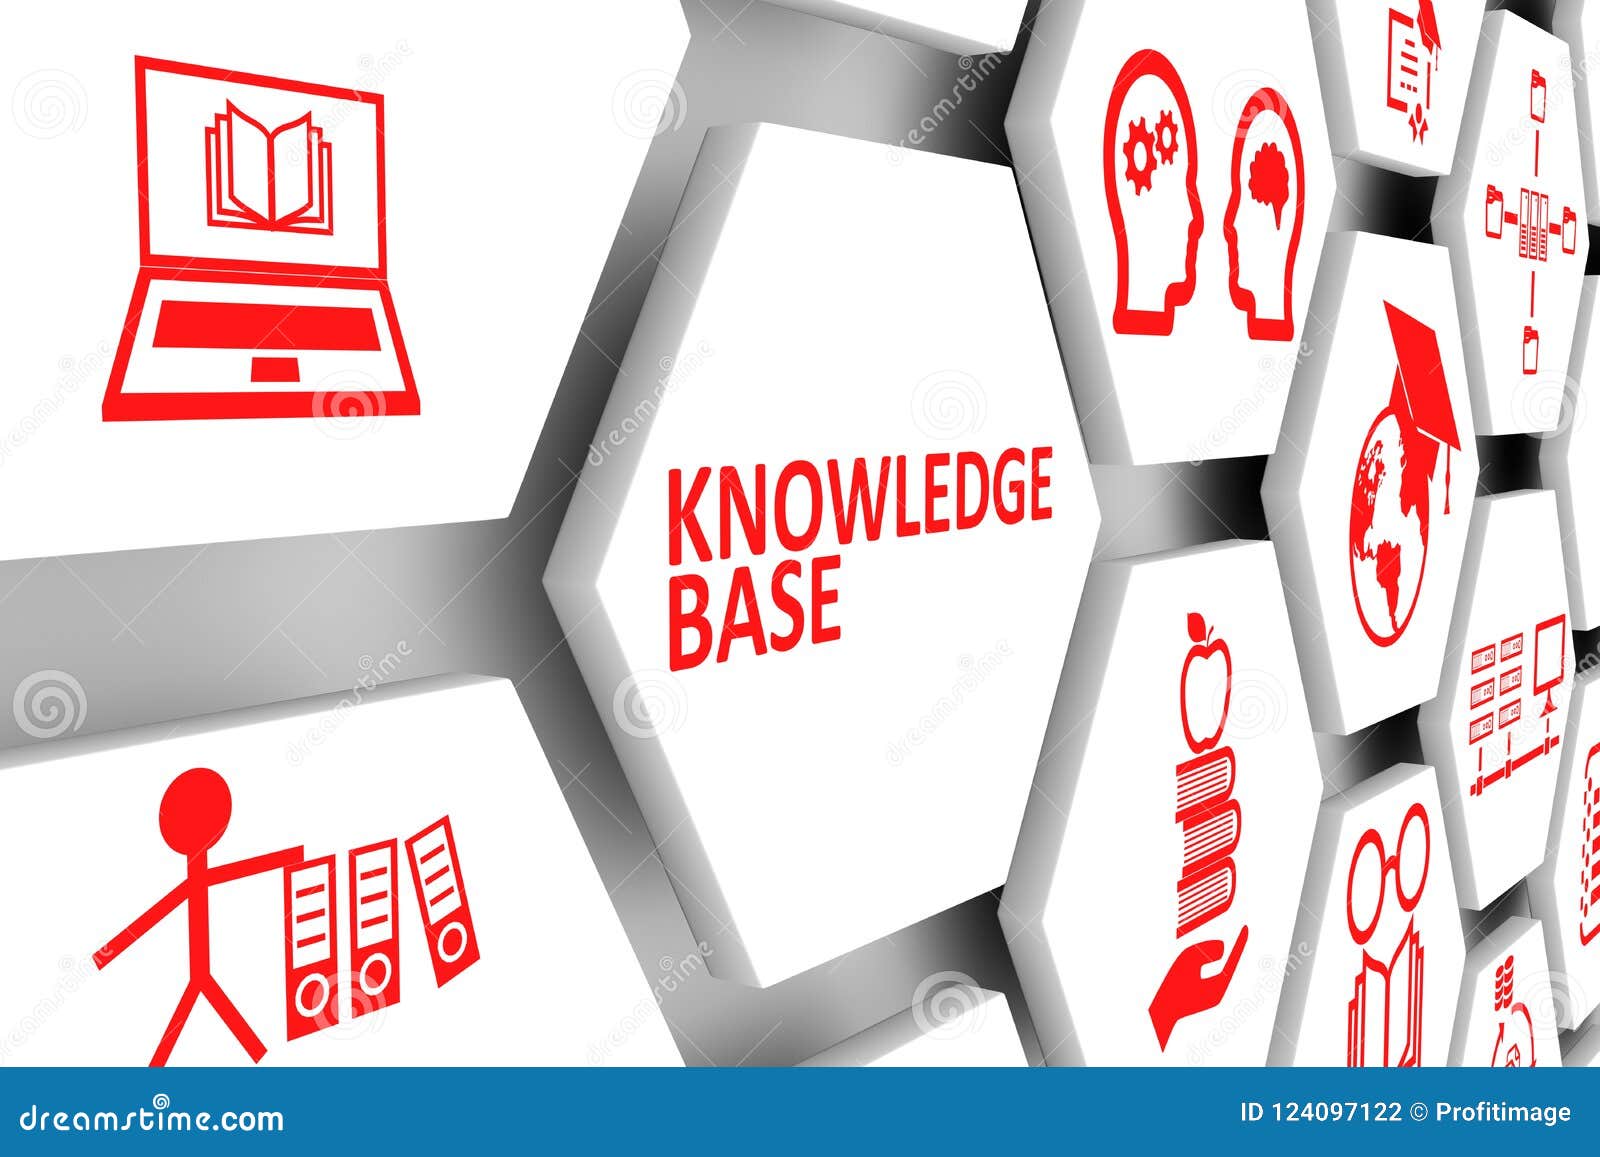 knowledge base concept